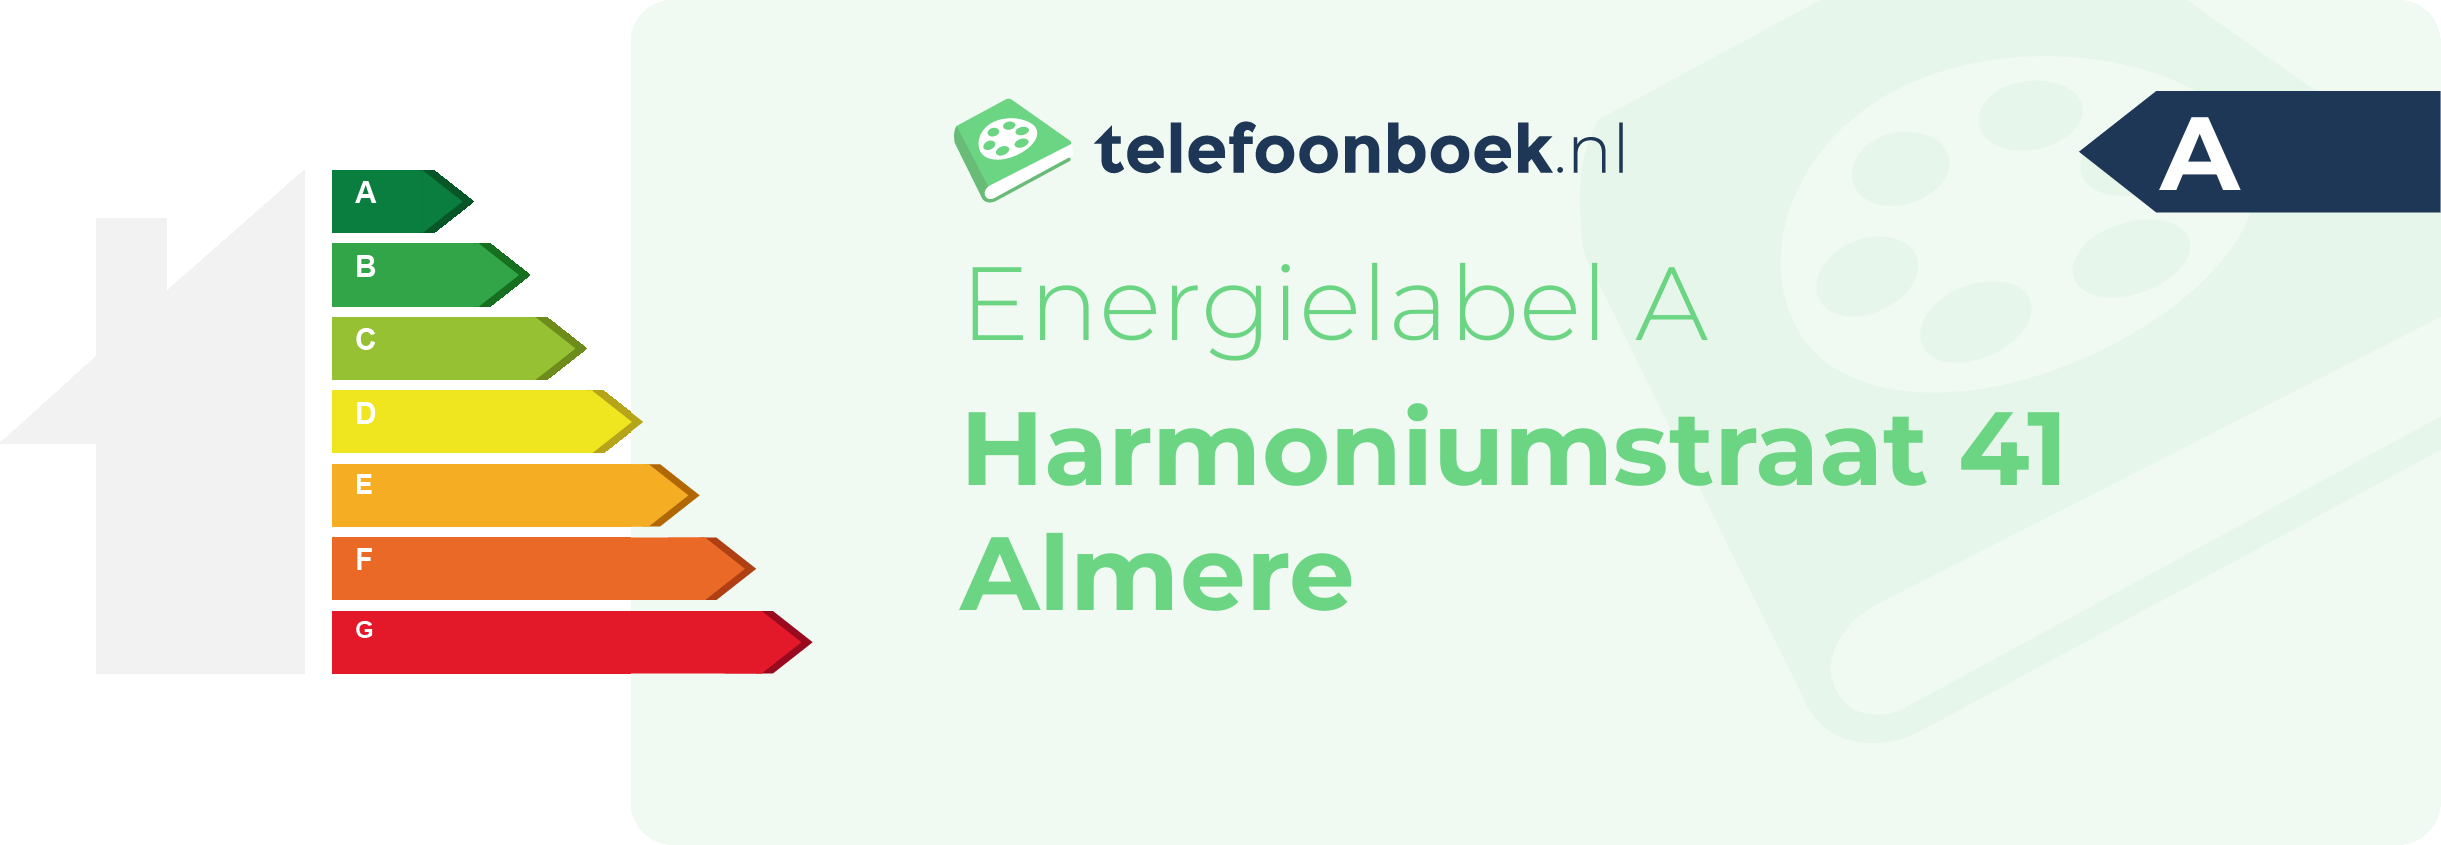 Energielabel Harmoniumstraat 41 Almere